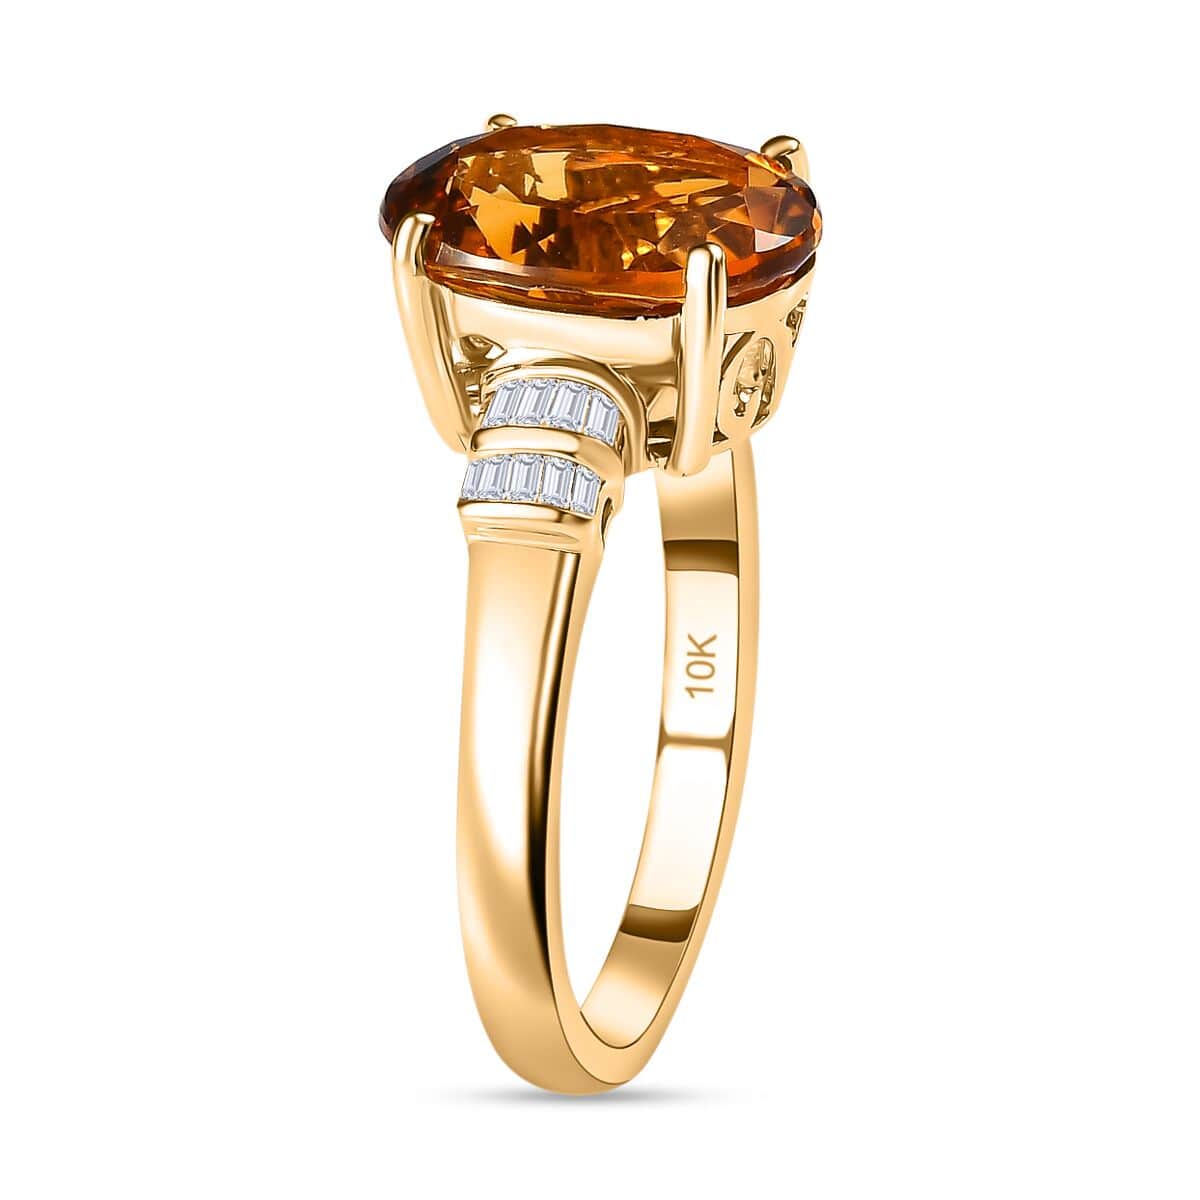 Luxoro 10K Yellow Gold Premium Santa Ana Madeira Citrine and Diamond Ring (Size 7.0) 4.35 ctw image number 3